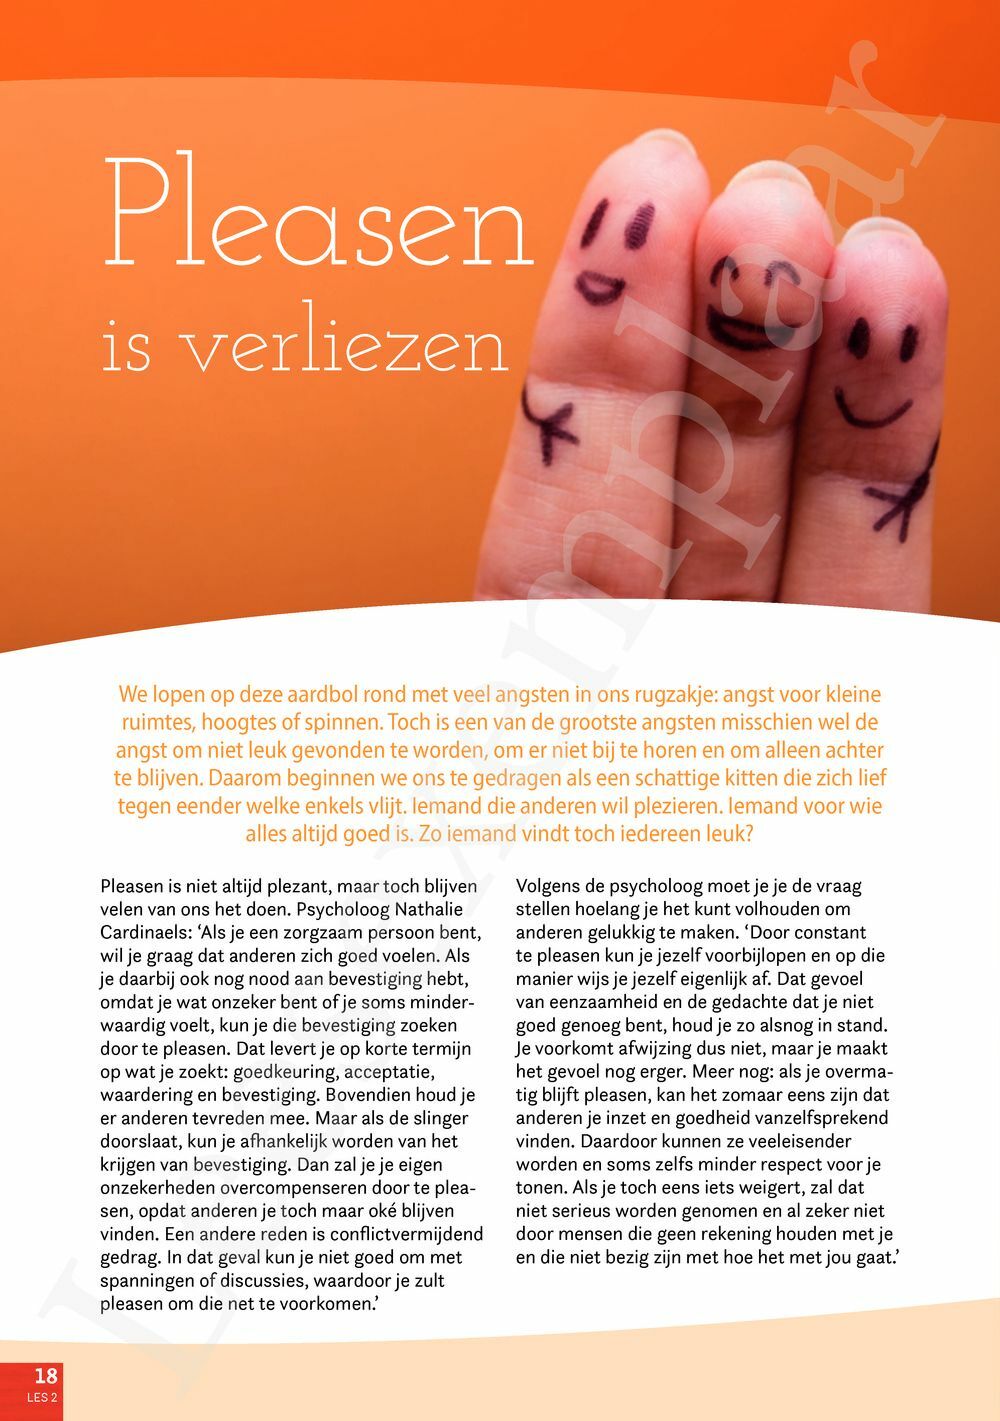 Preview: Campus Nederlands 3 Bronnenboek (incl. Pelckmans Portaal)